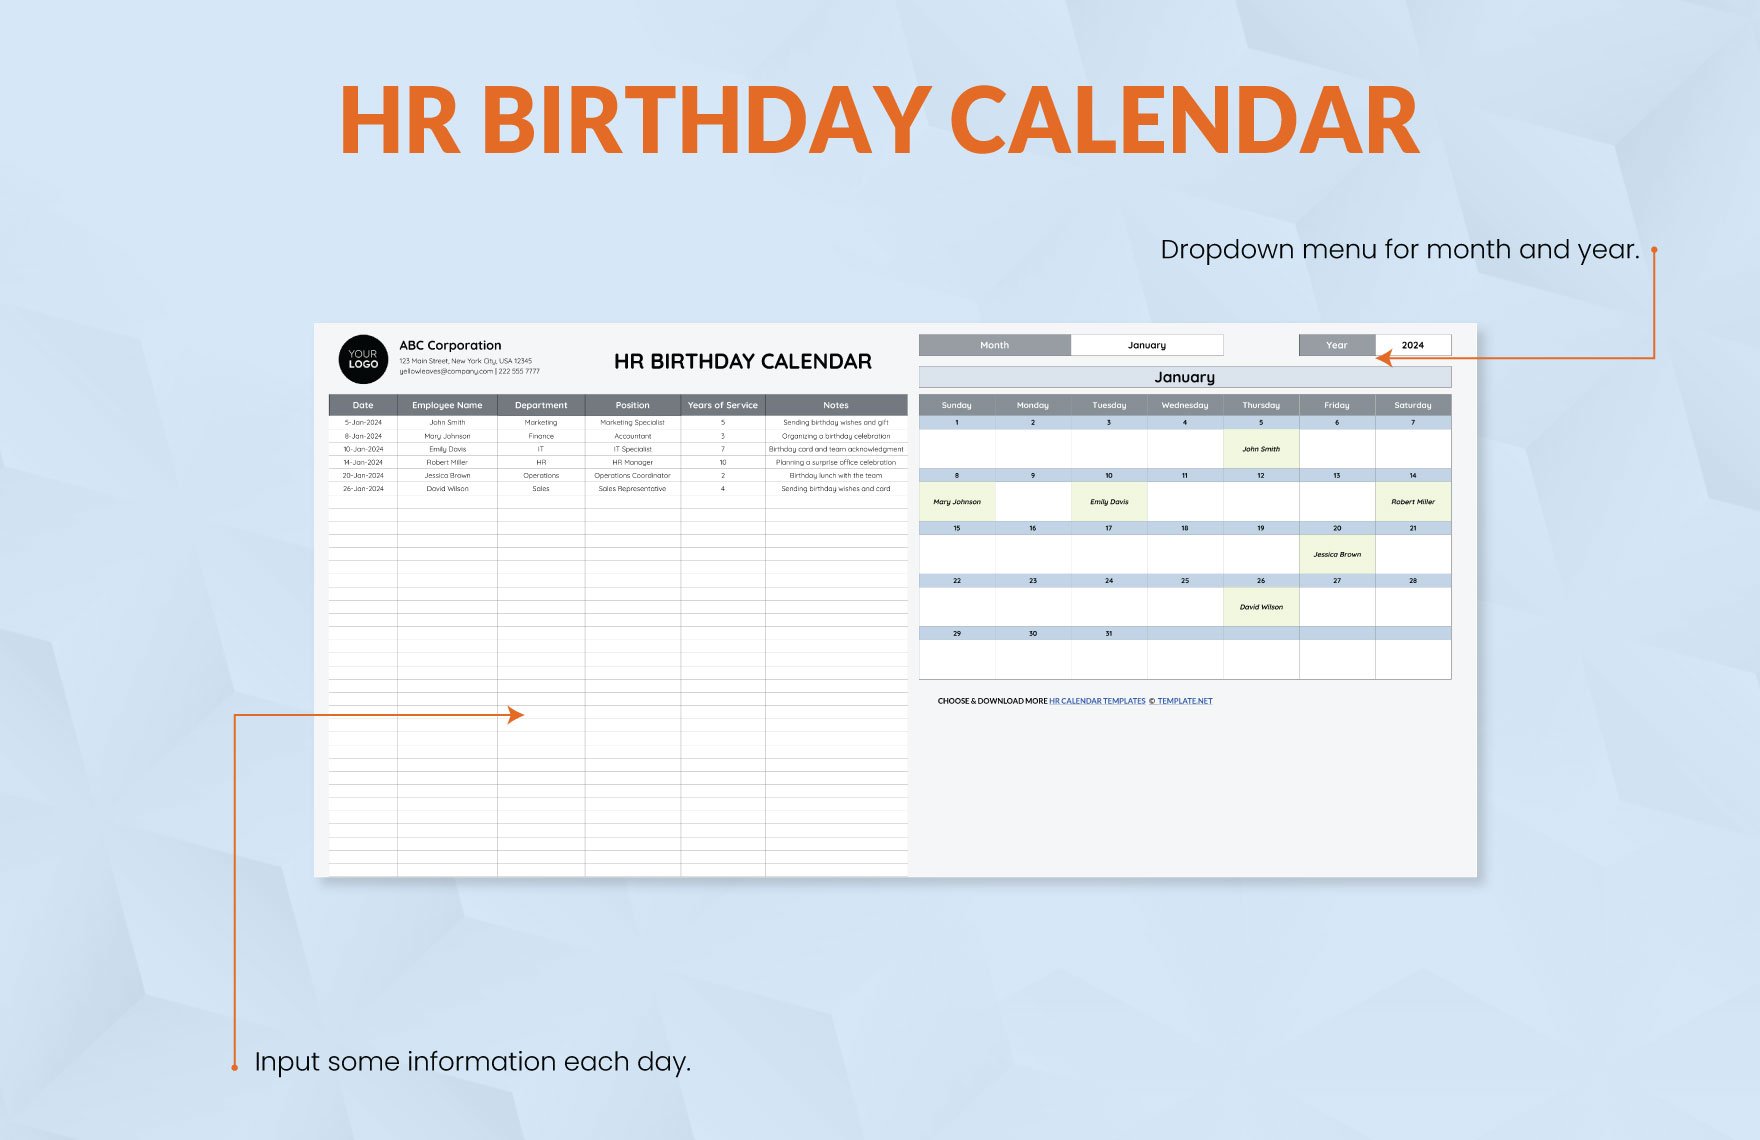 HR Birthday Calendar Template